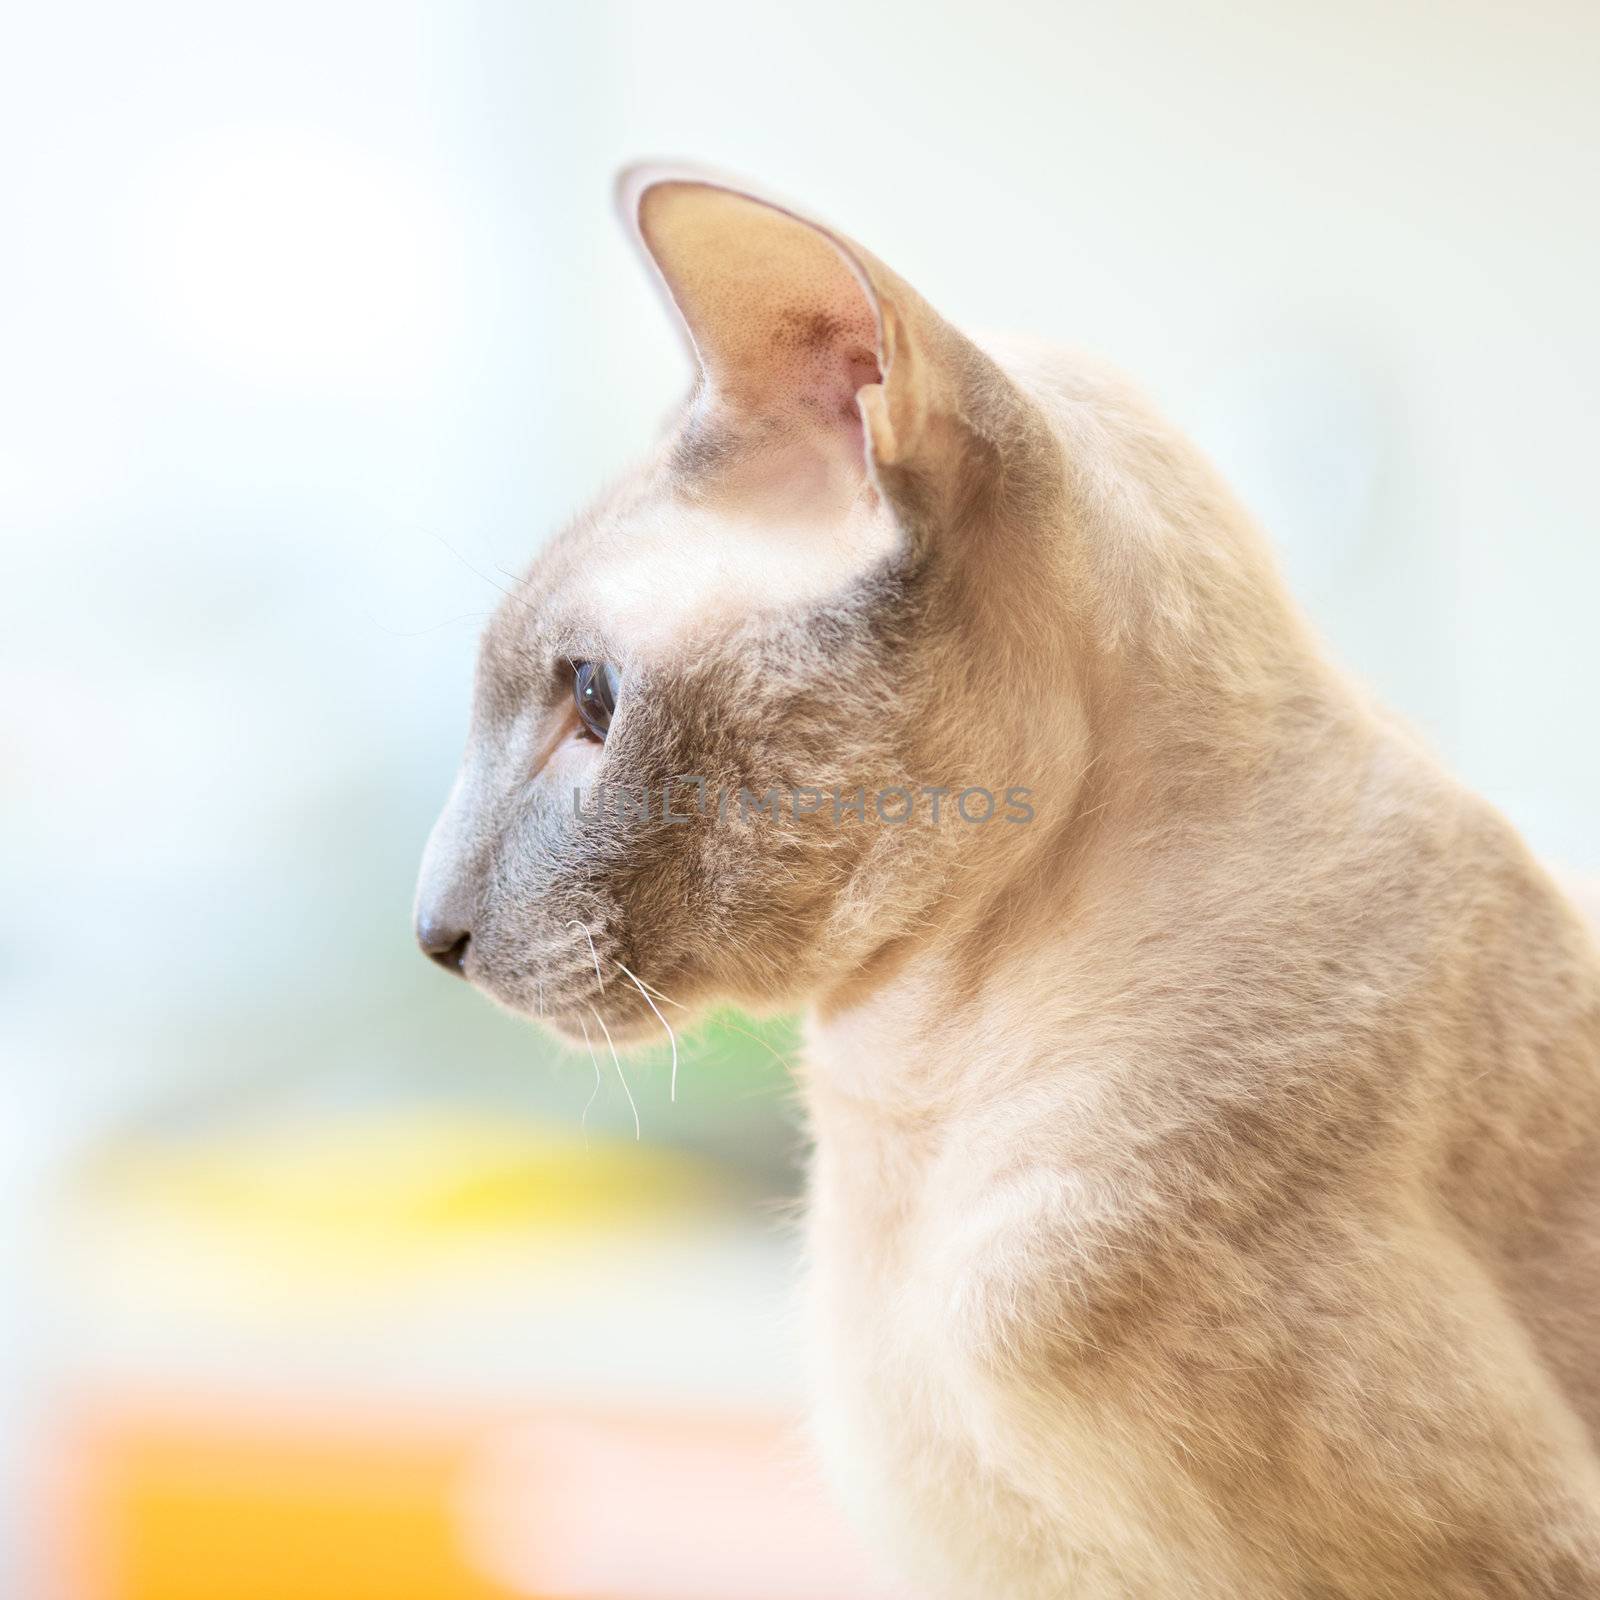 Hairless Cat by petr_malyshev